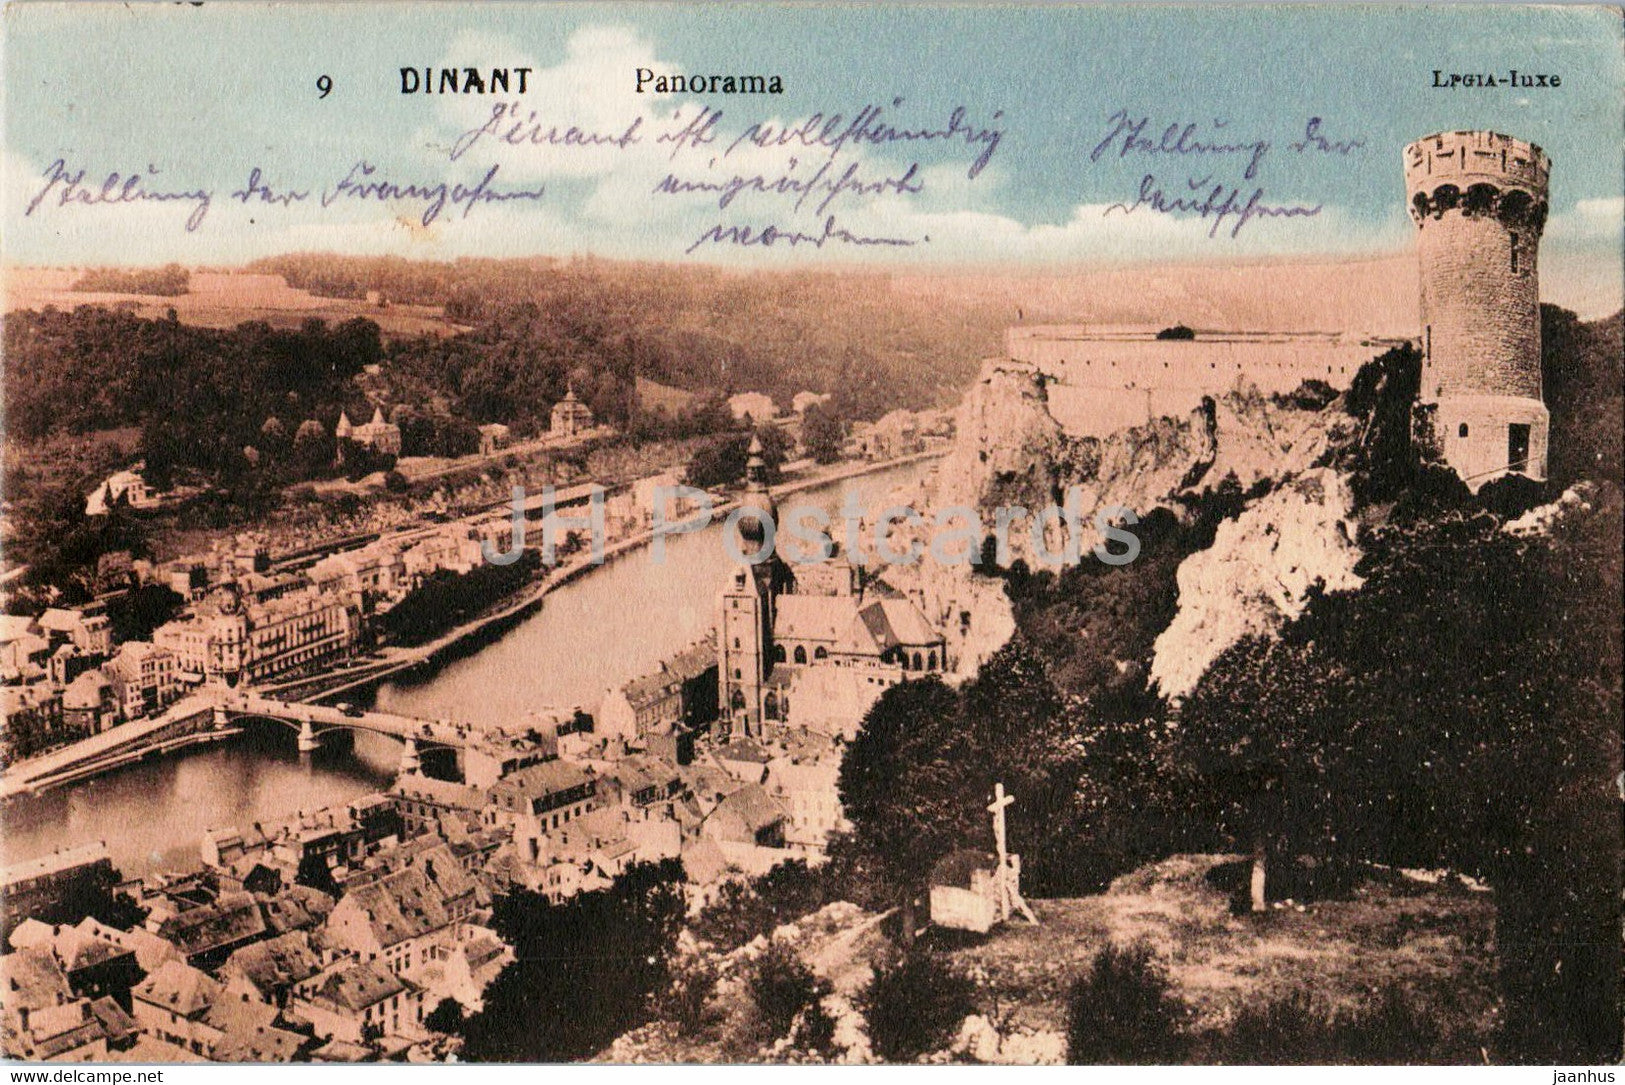 Dinant - Panorama - 9 - old postcard - 1914 - Belgium - used - JH Postcards